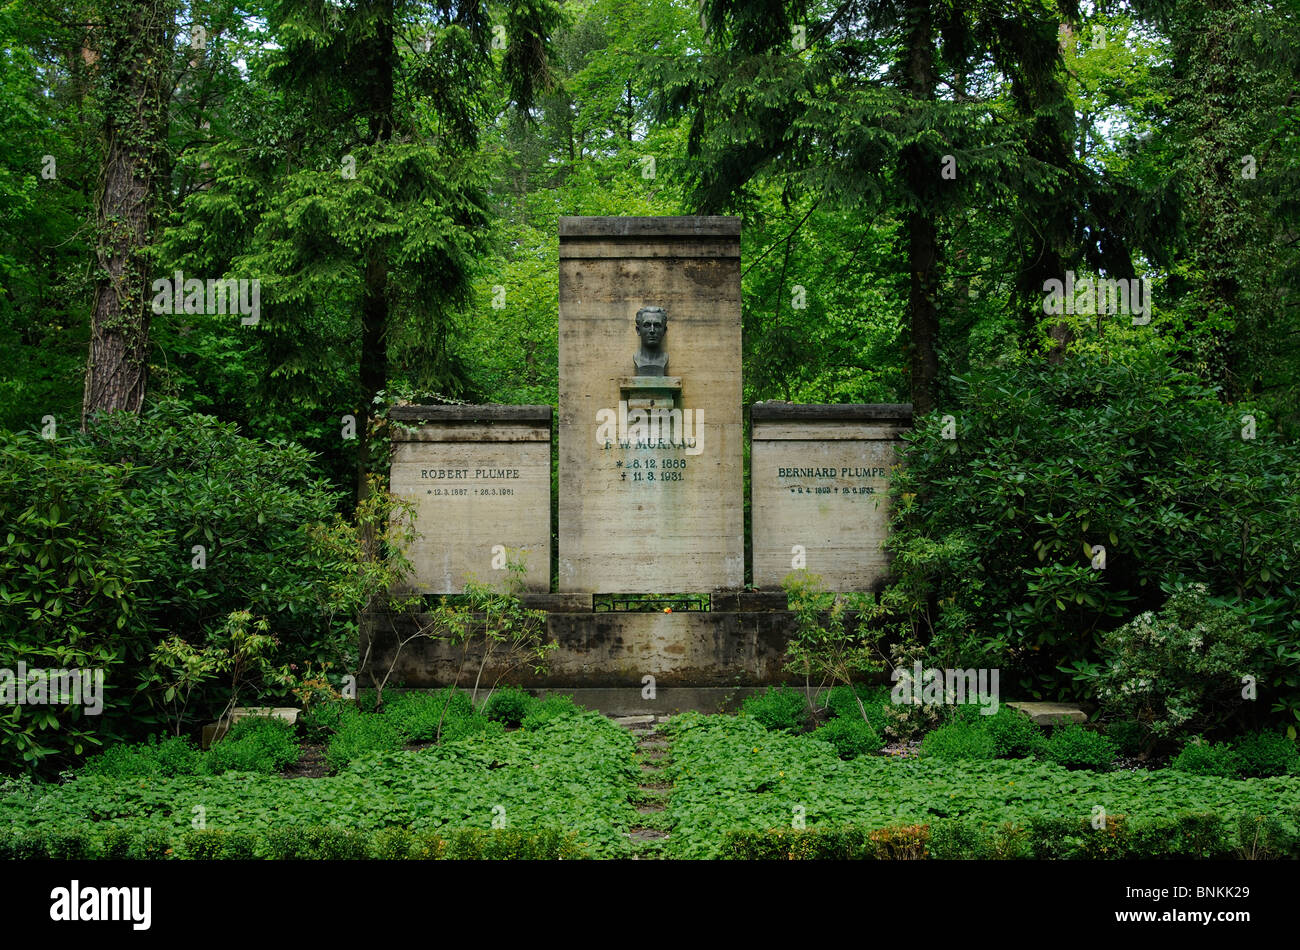 Tomba di Friedrich Wilhelm Murnau, il film muto direttore, Suedwestkirchhof Stahnsdorf cimitero, vicino a Berlino e nel Land di Brandeburgo, in Germania. Foto Stock